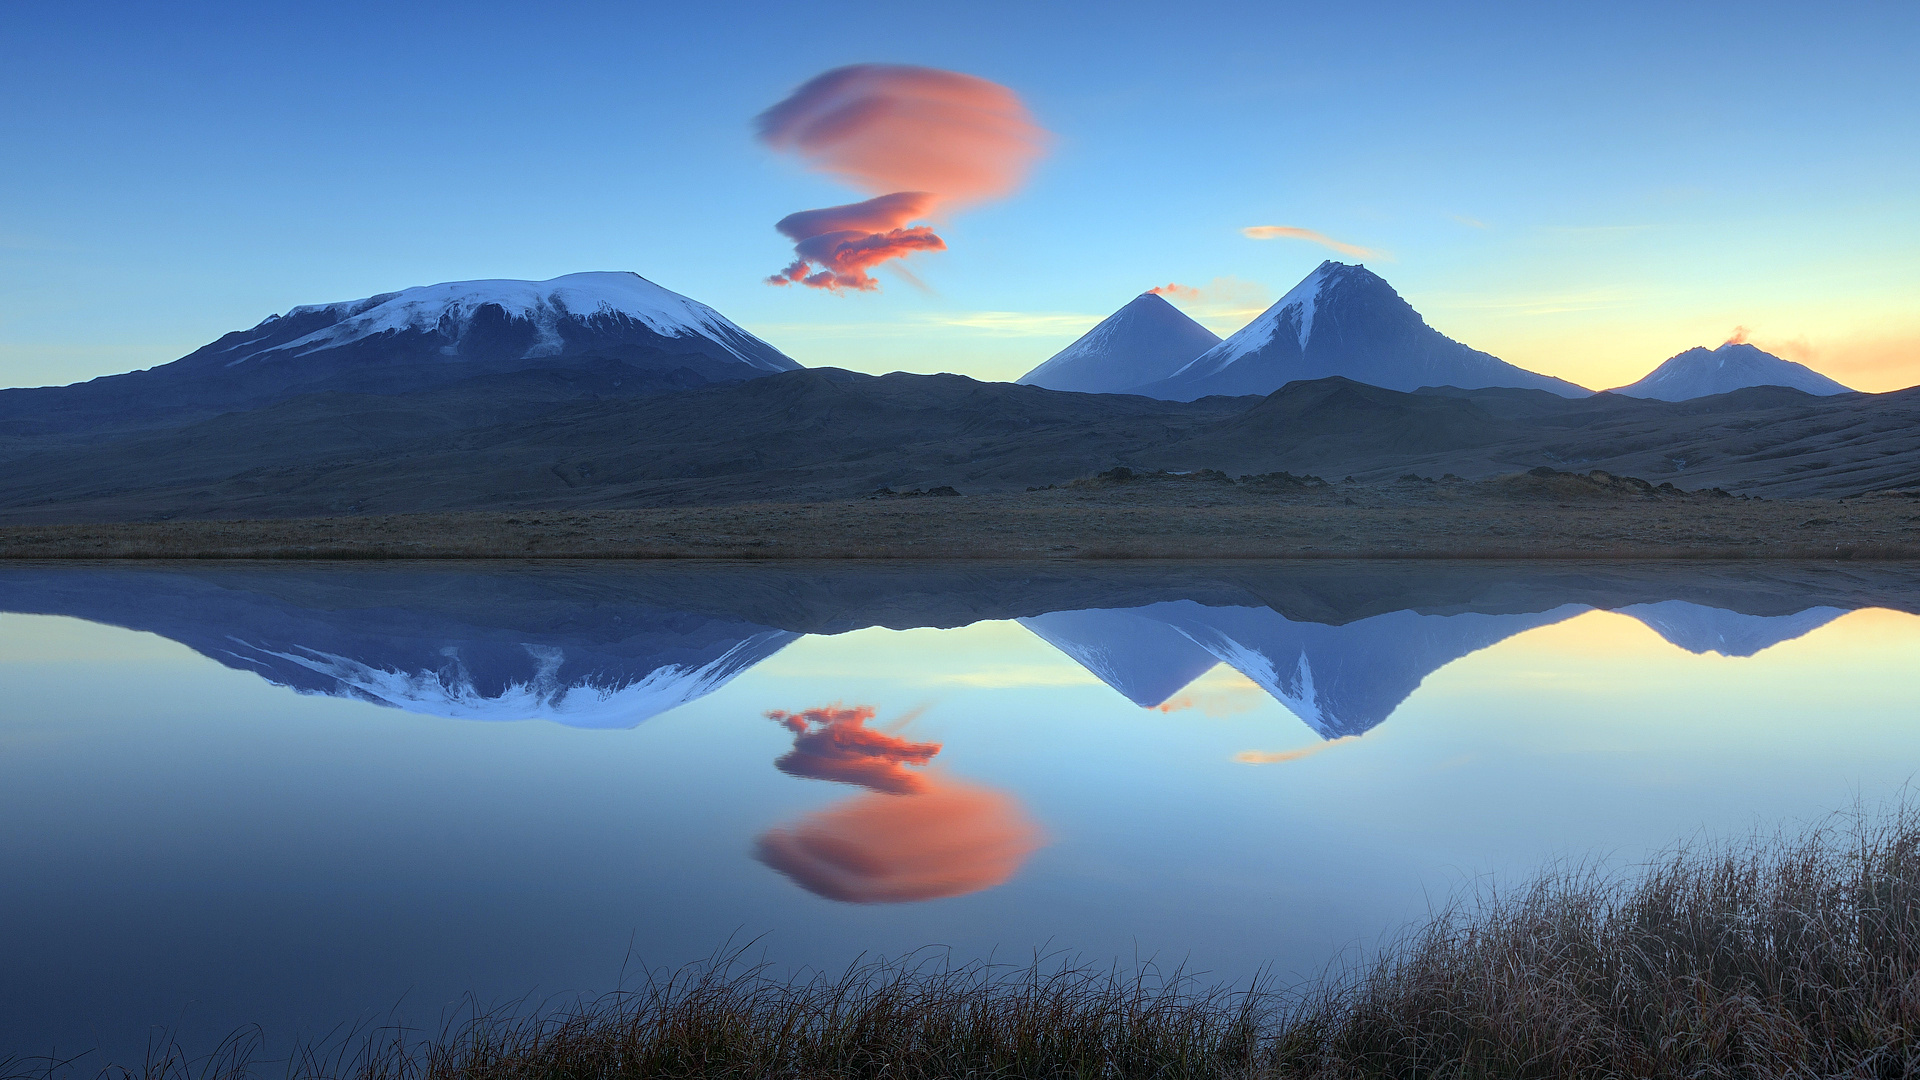 Bering Sea, Majestic mountains, Reflective waters, Volcanic landscape, 1920x1080 Full HD Desktop